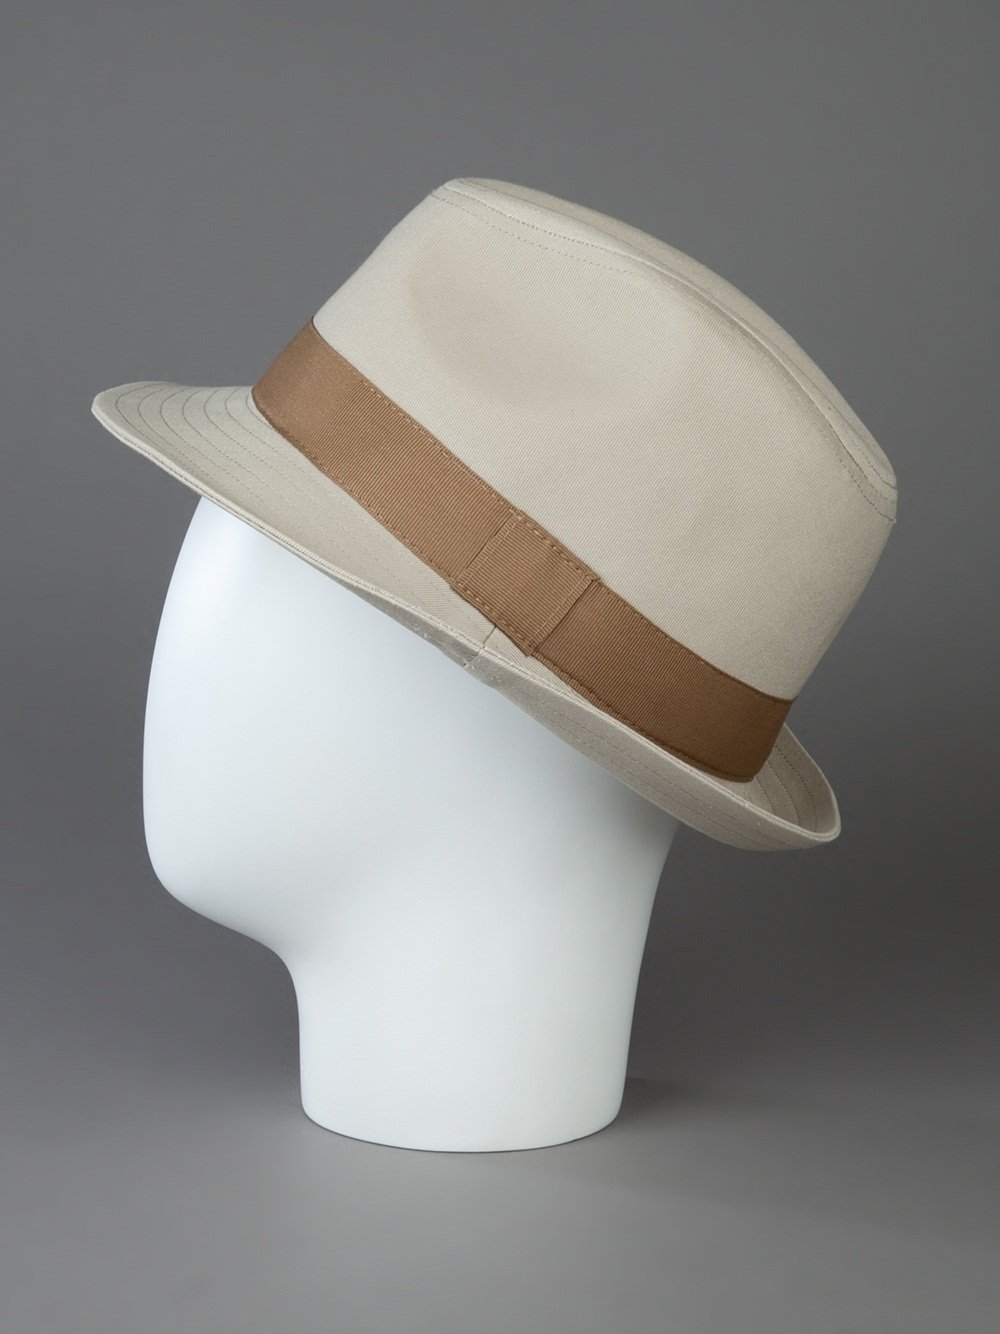 Ralph Lauren Panama Hat in Natural for Men - Lyst